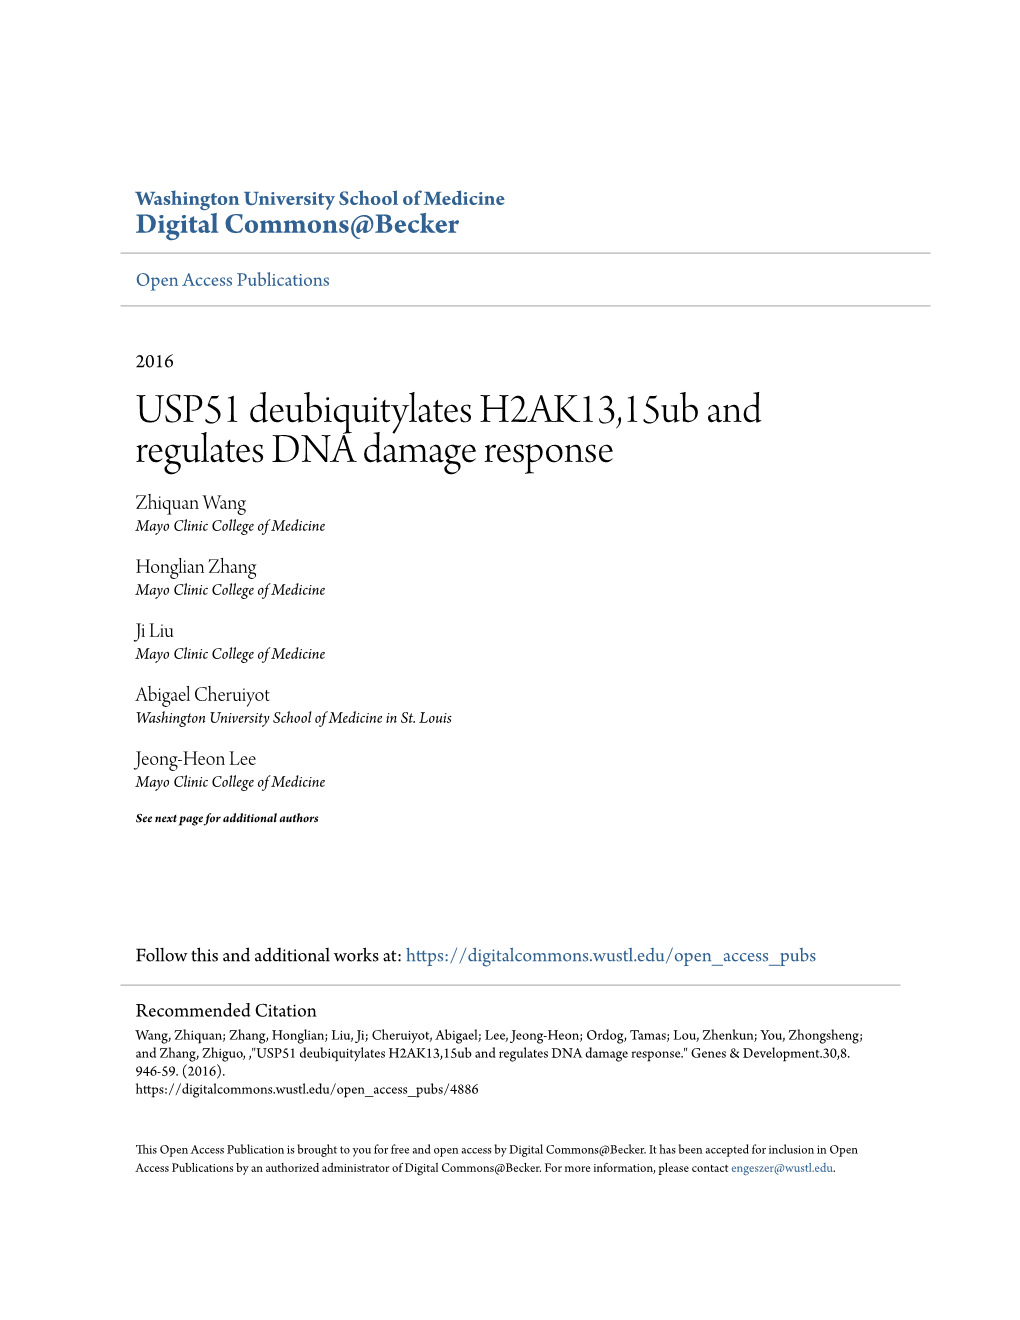 USP51 Deubiquitylates H2AK13,15Ub and Regulates DNA Damage Response Zhiquan Wang Mayo Clinic College of Medicine